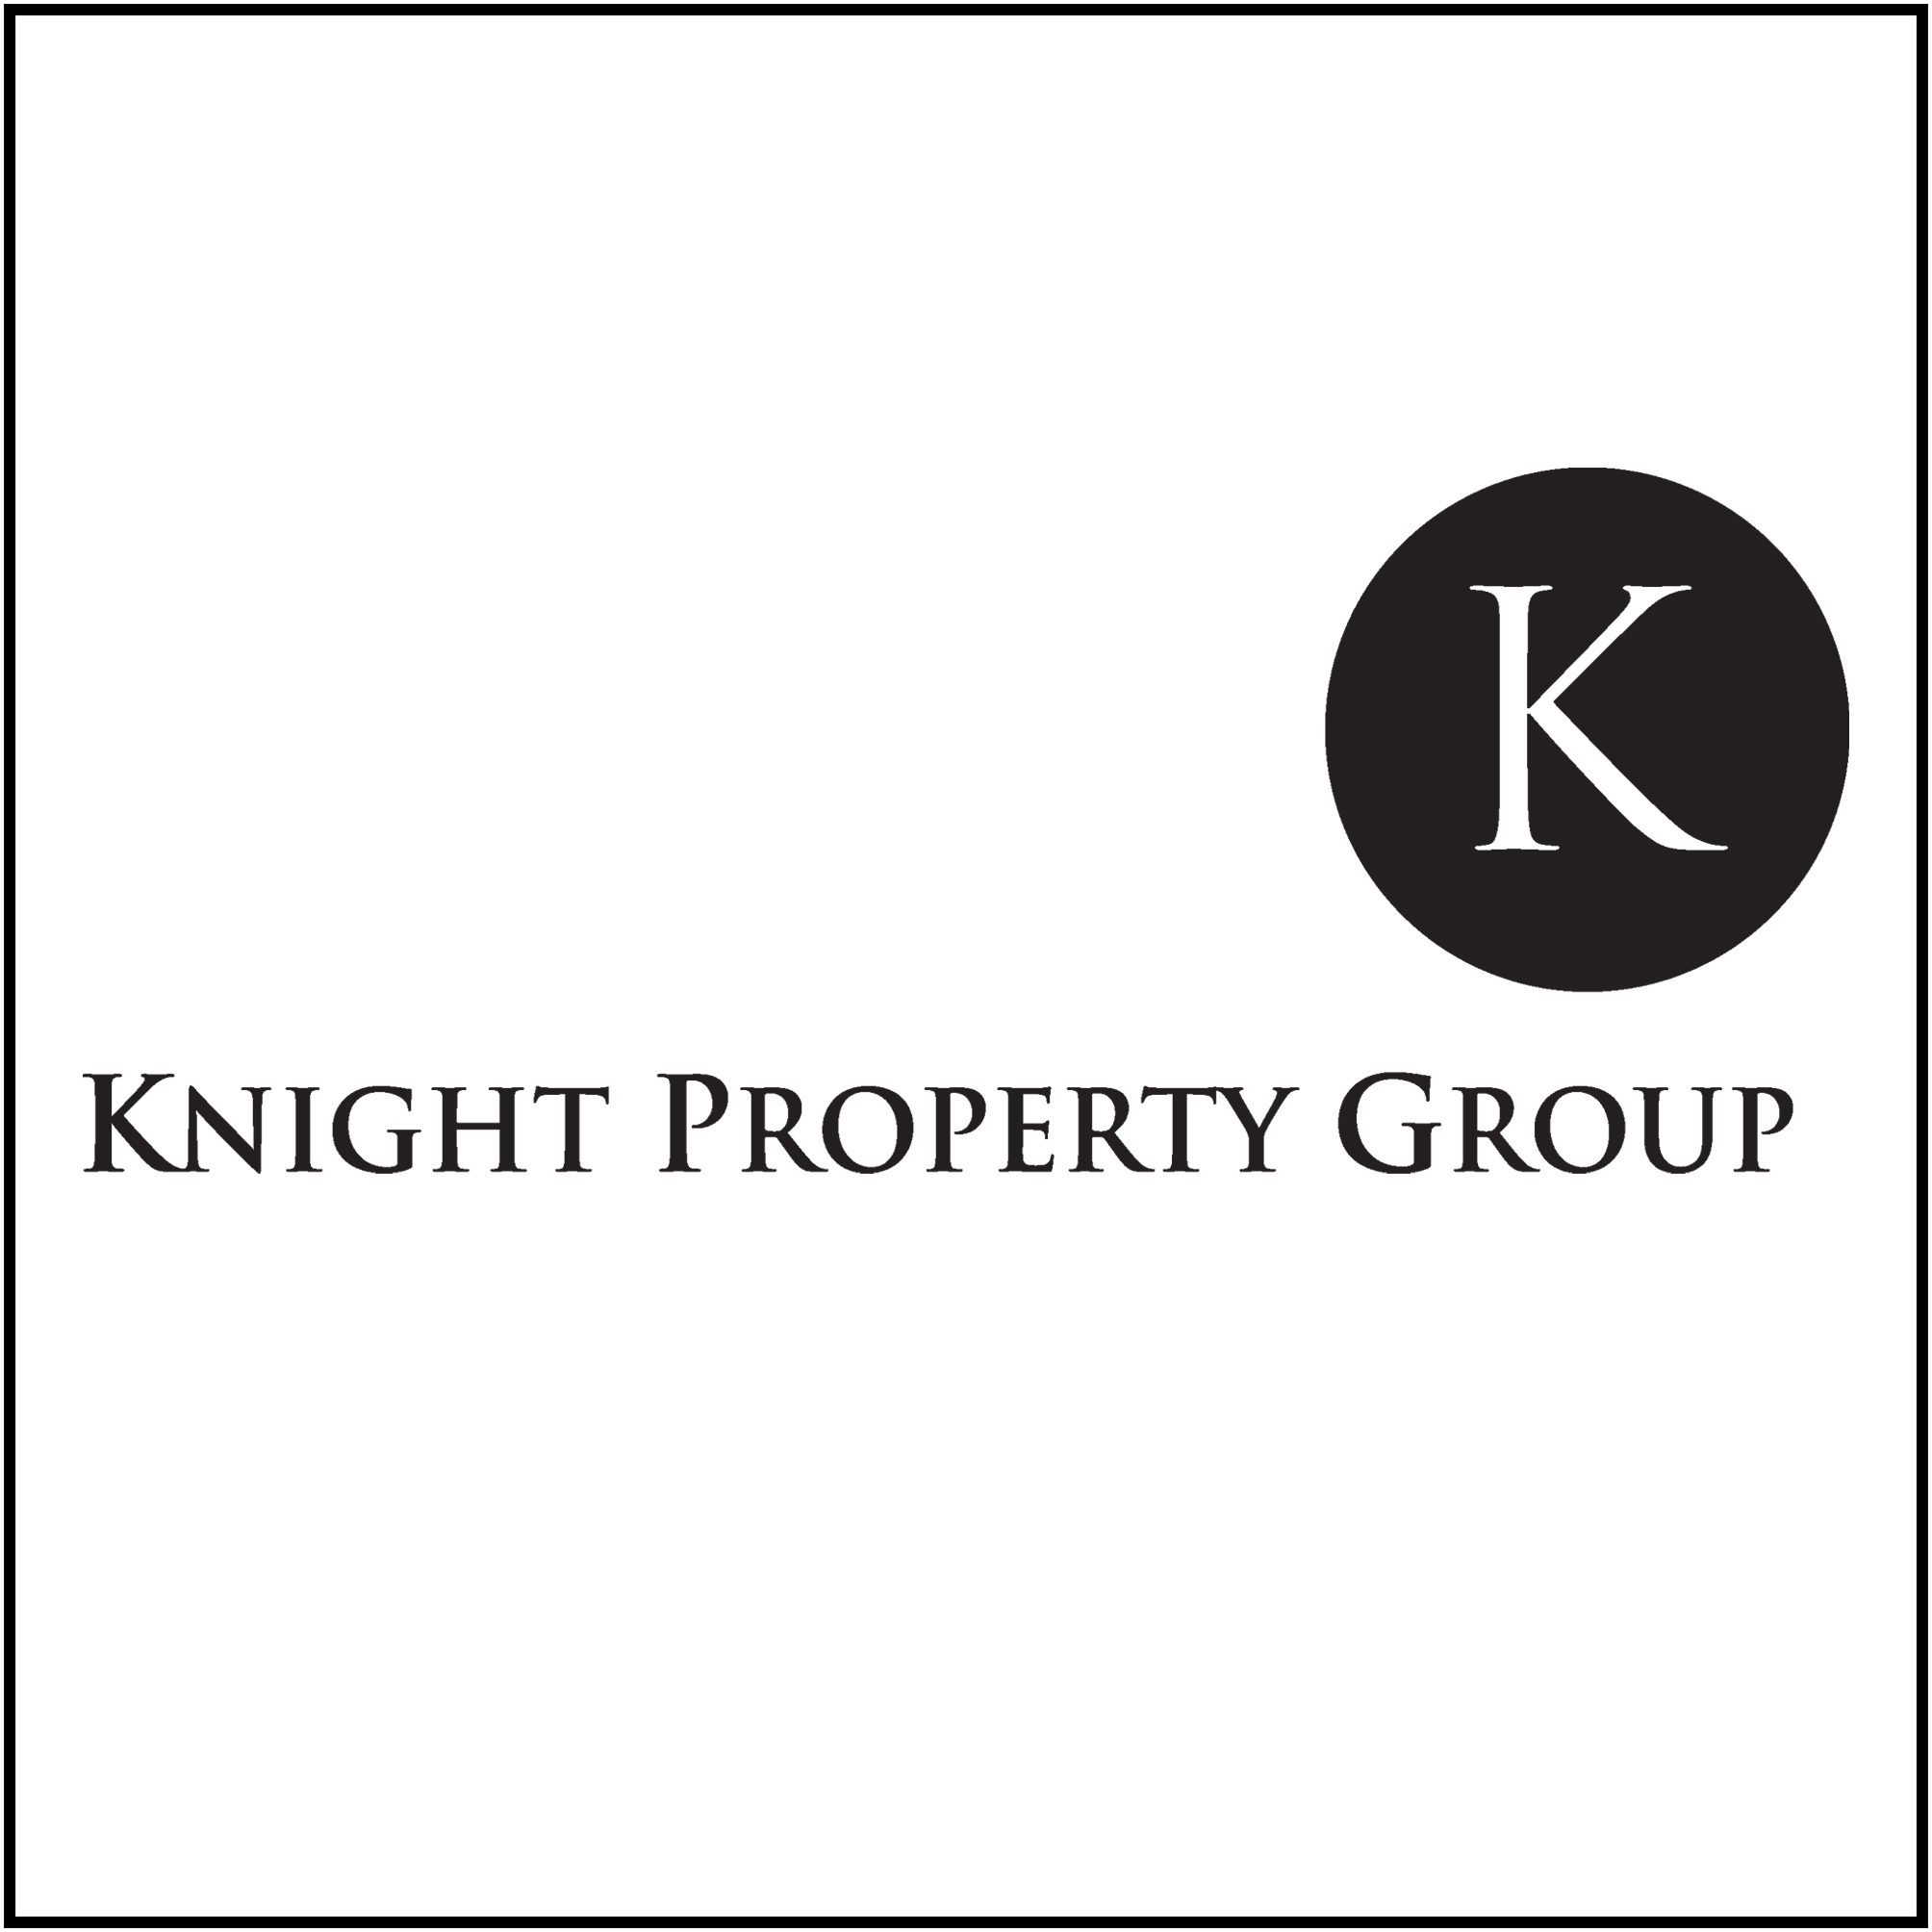 Knight Property